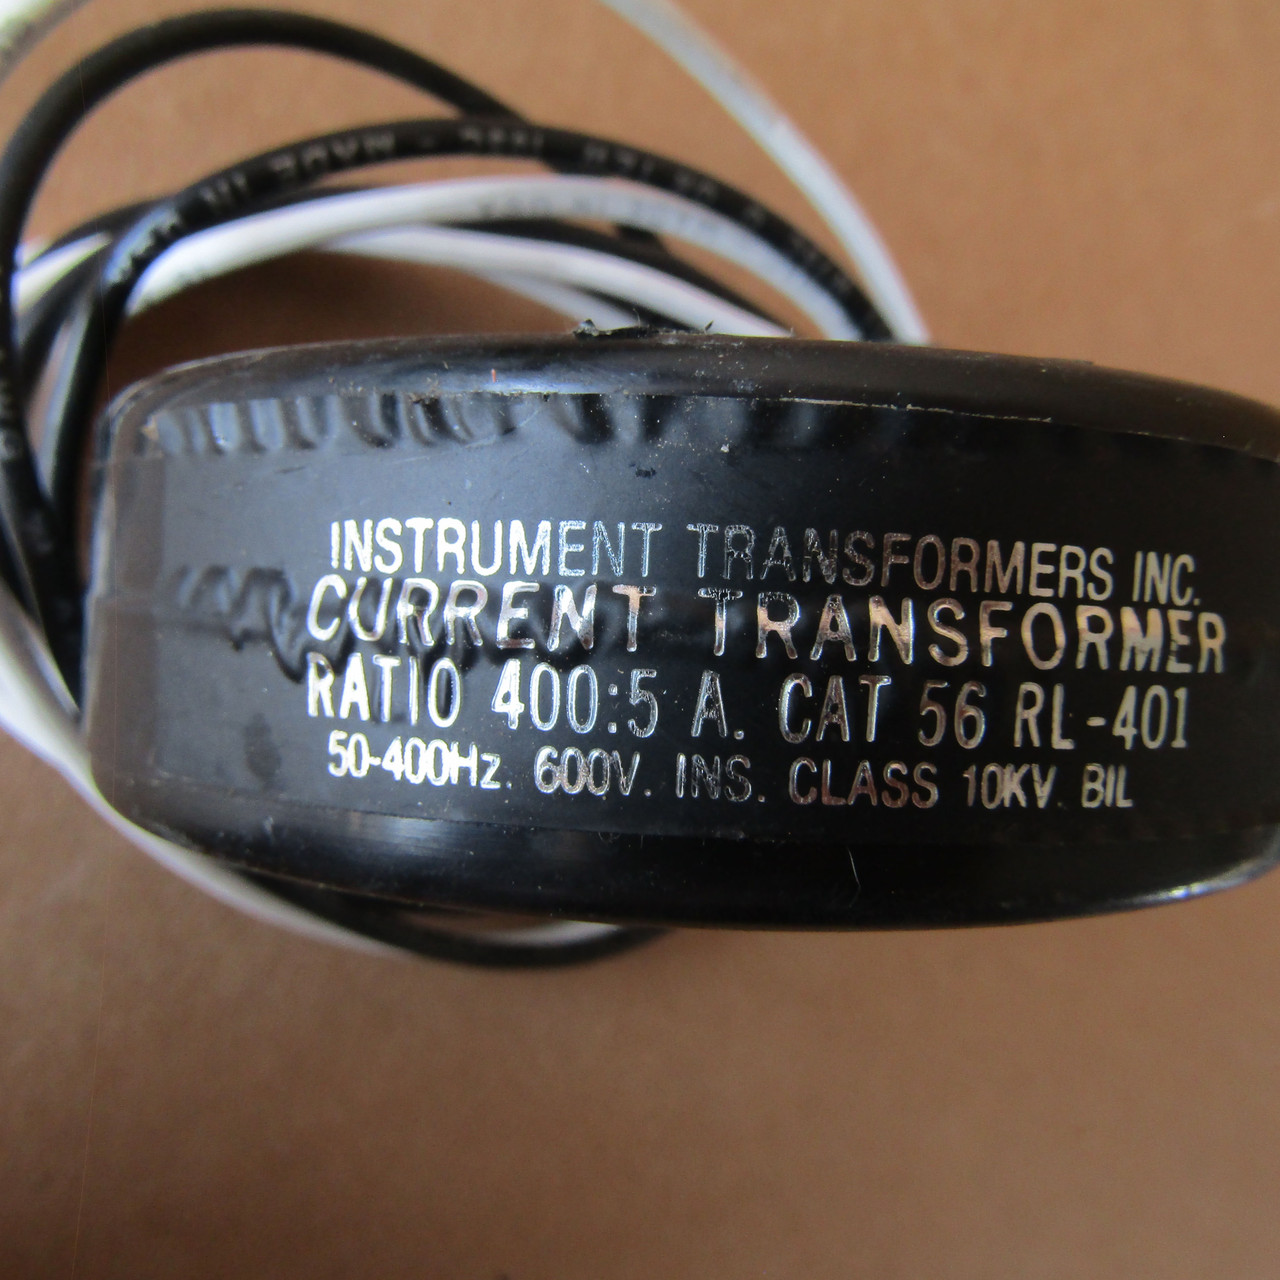 Instrument Transformers 56RL-401 Current Transformer 400:5A 600V - Used